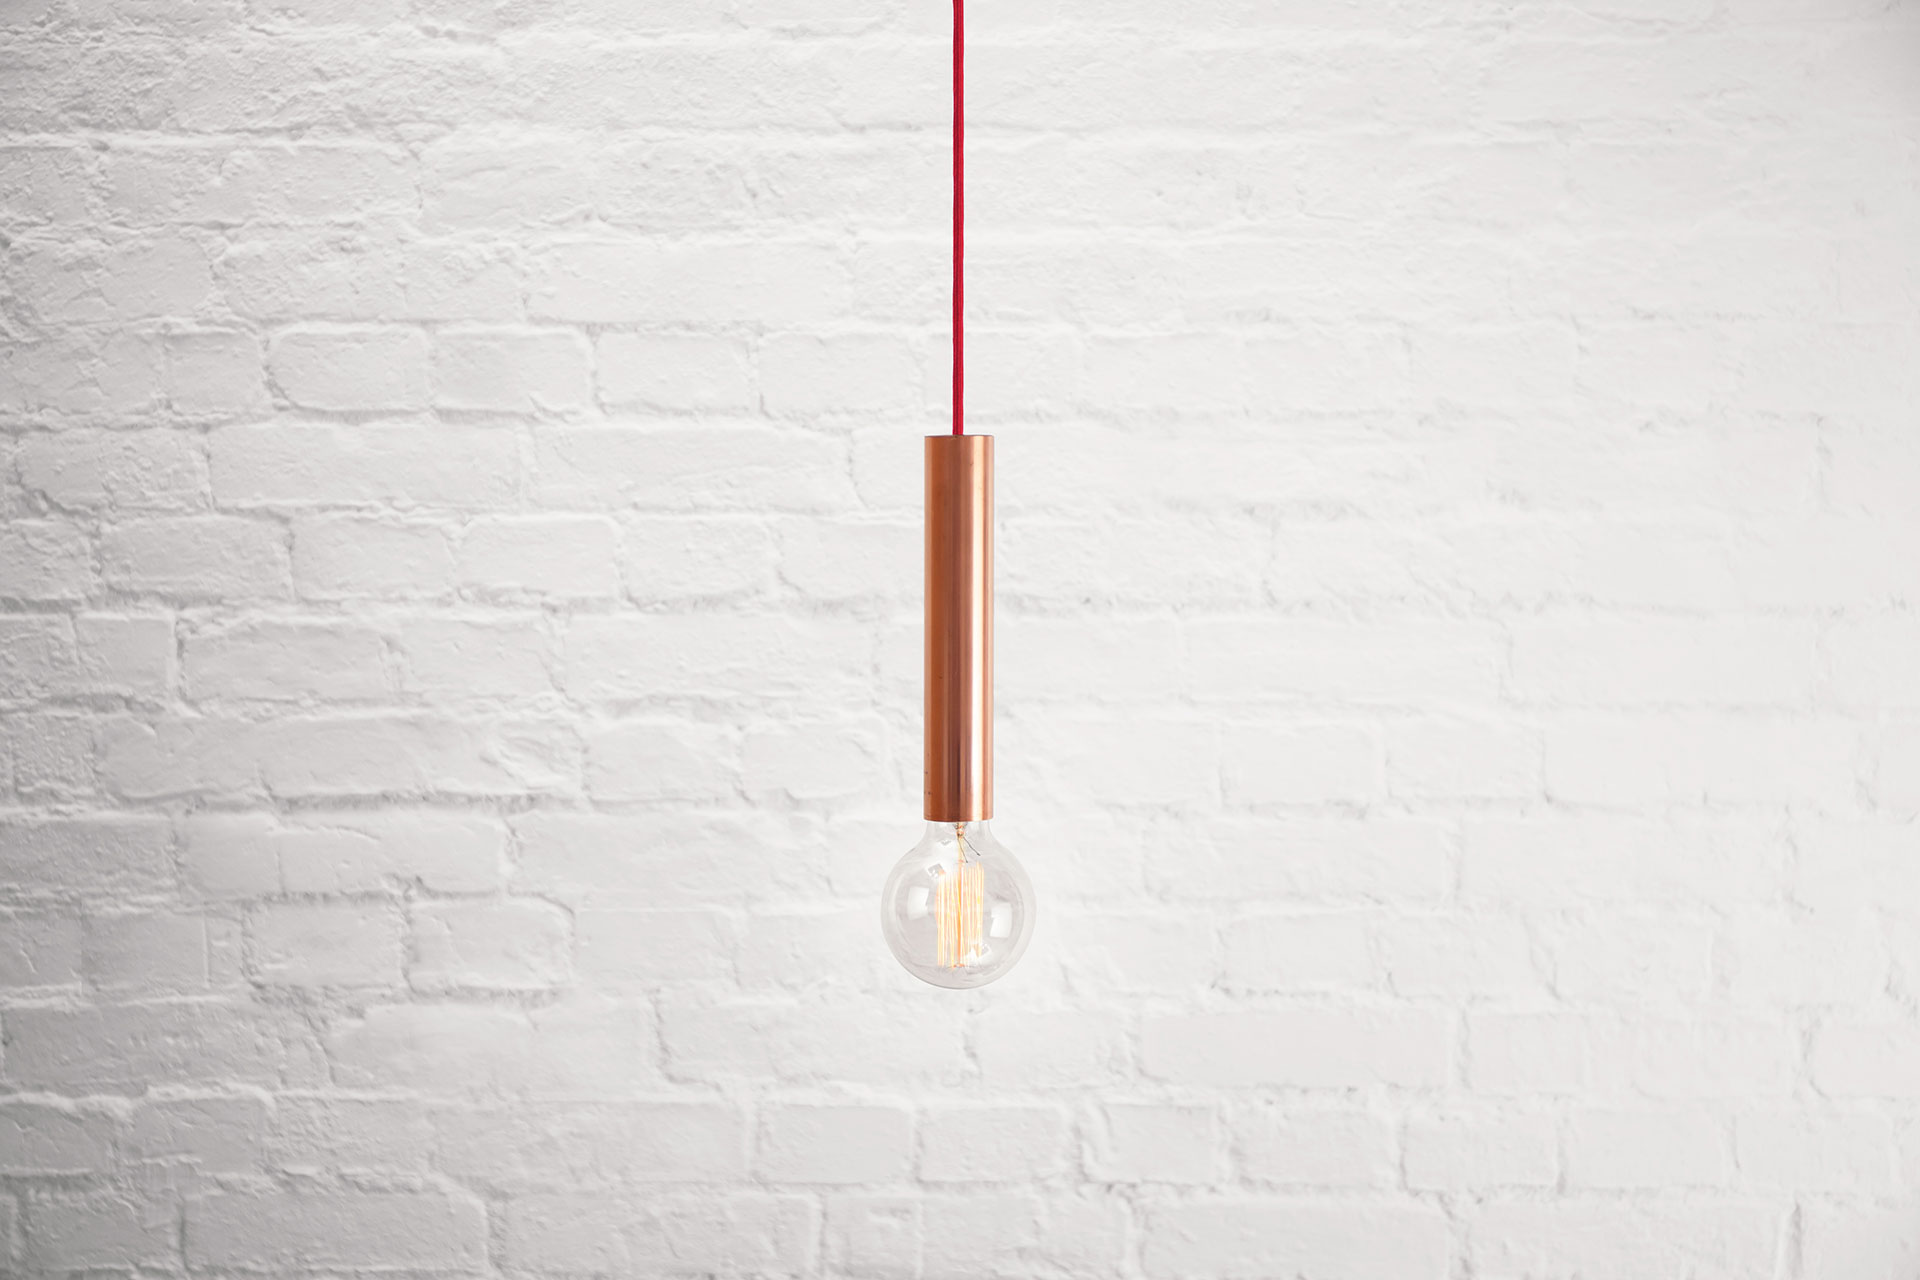 Simple copper pendant lamp in loft style apartment